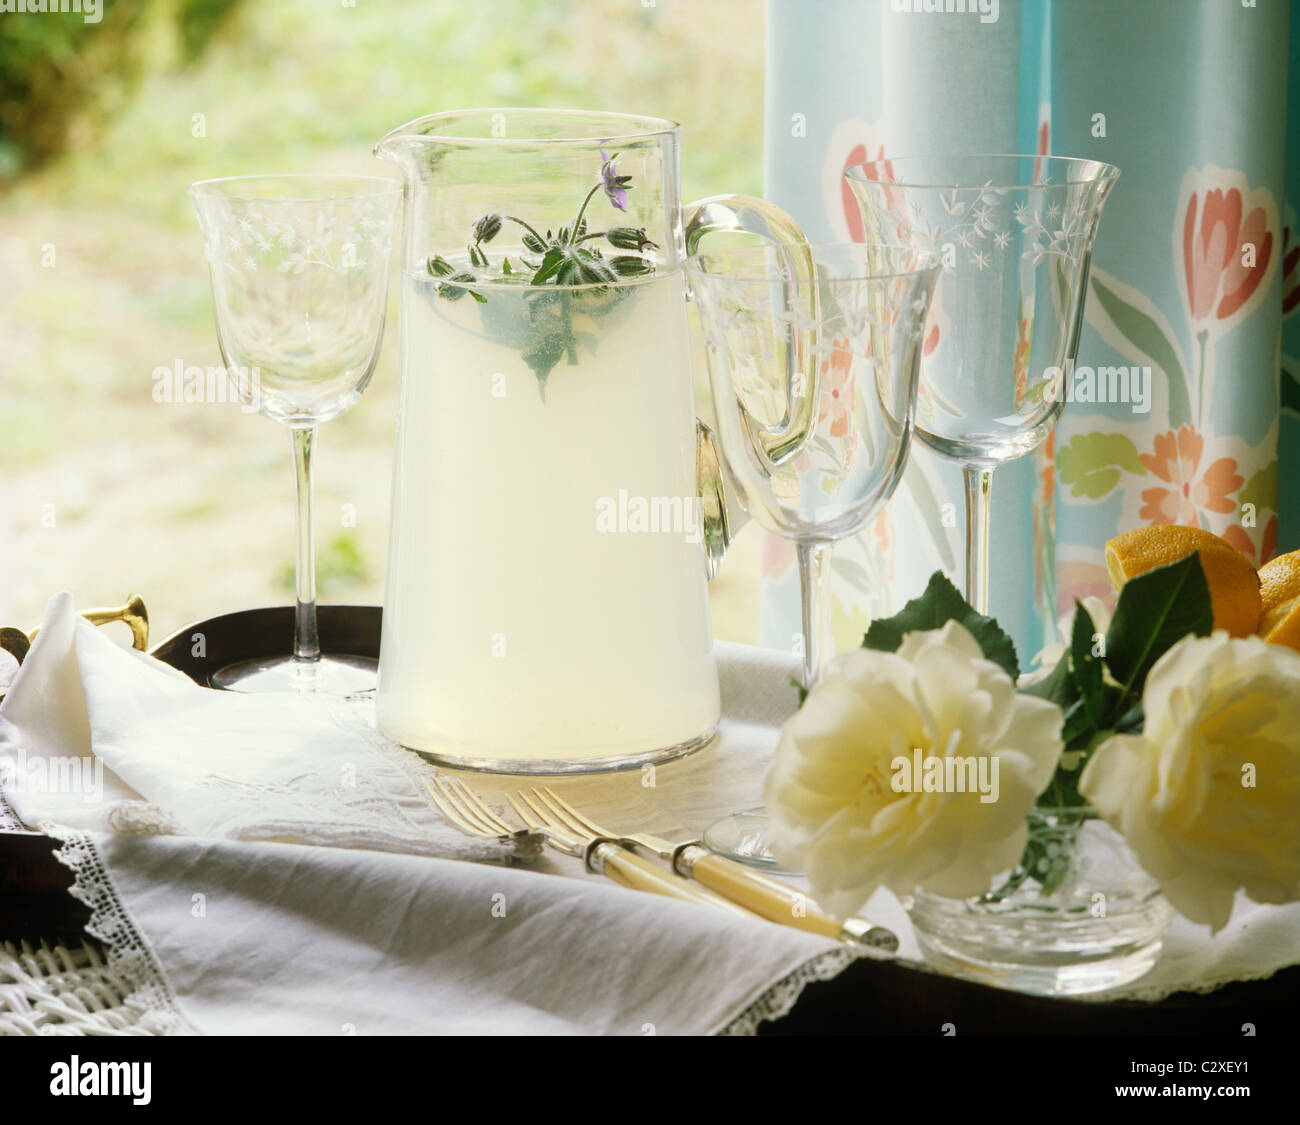 Un detalle de una jarra de cristal llena de limonada casera Foto de stock